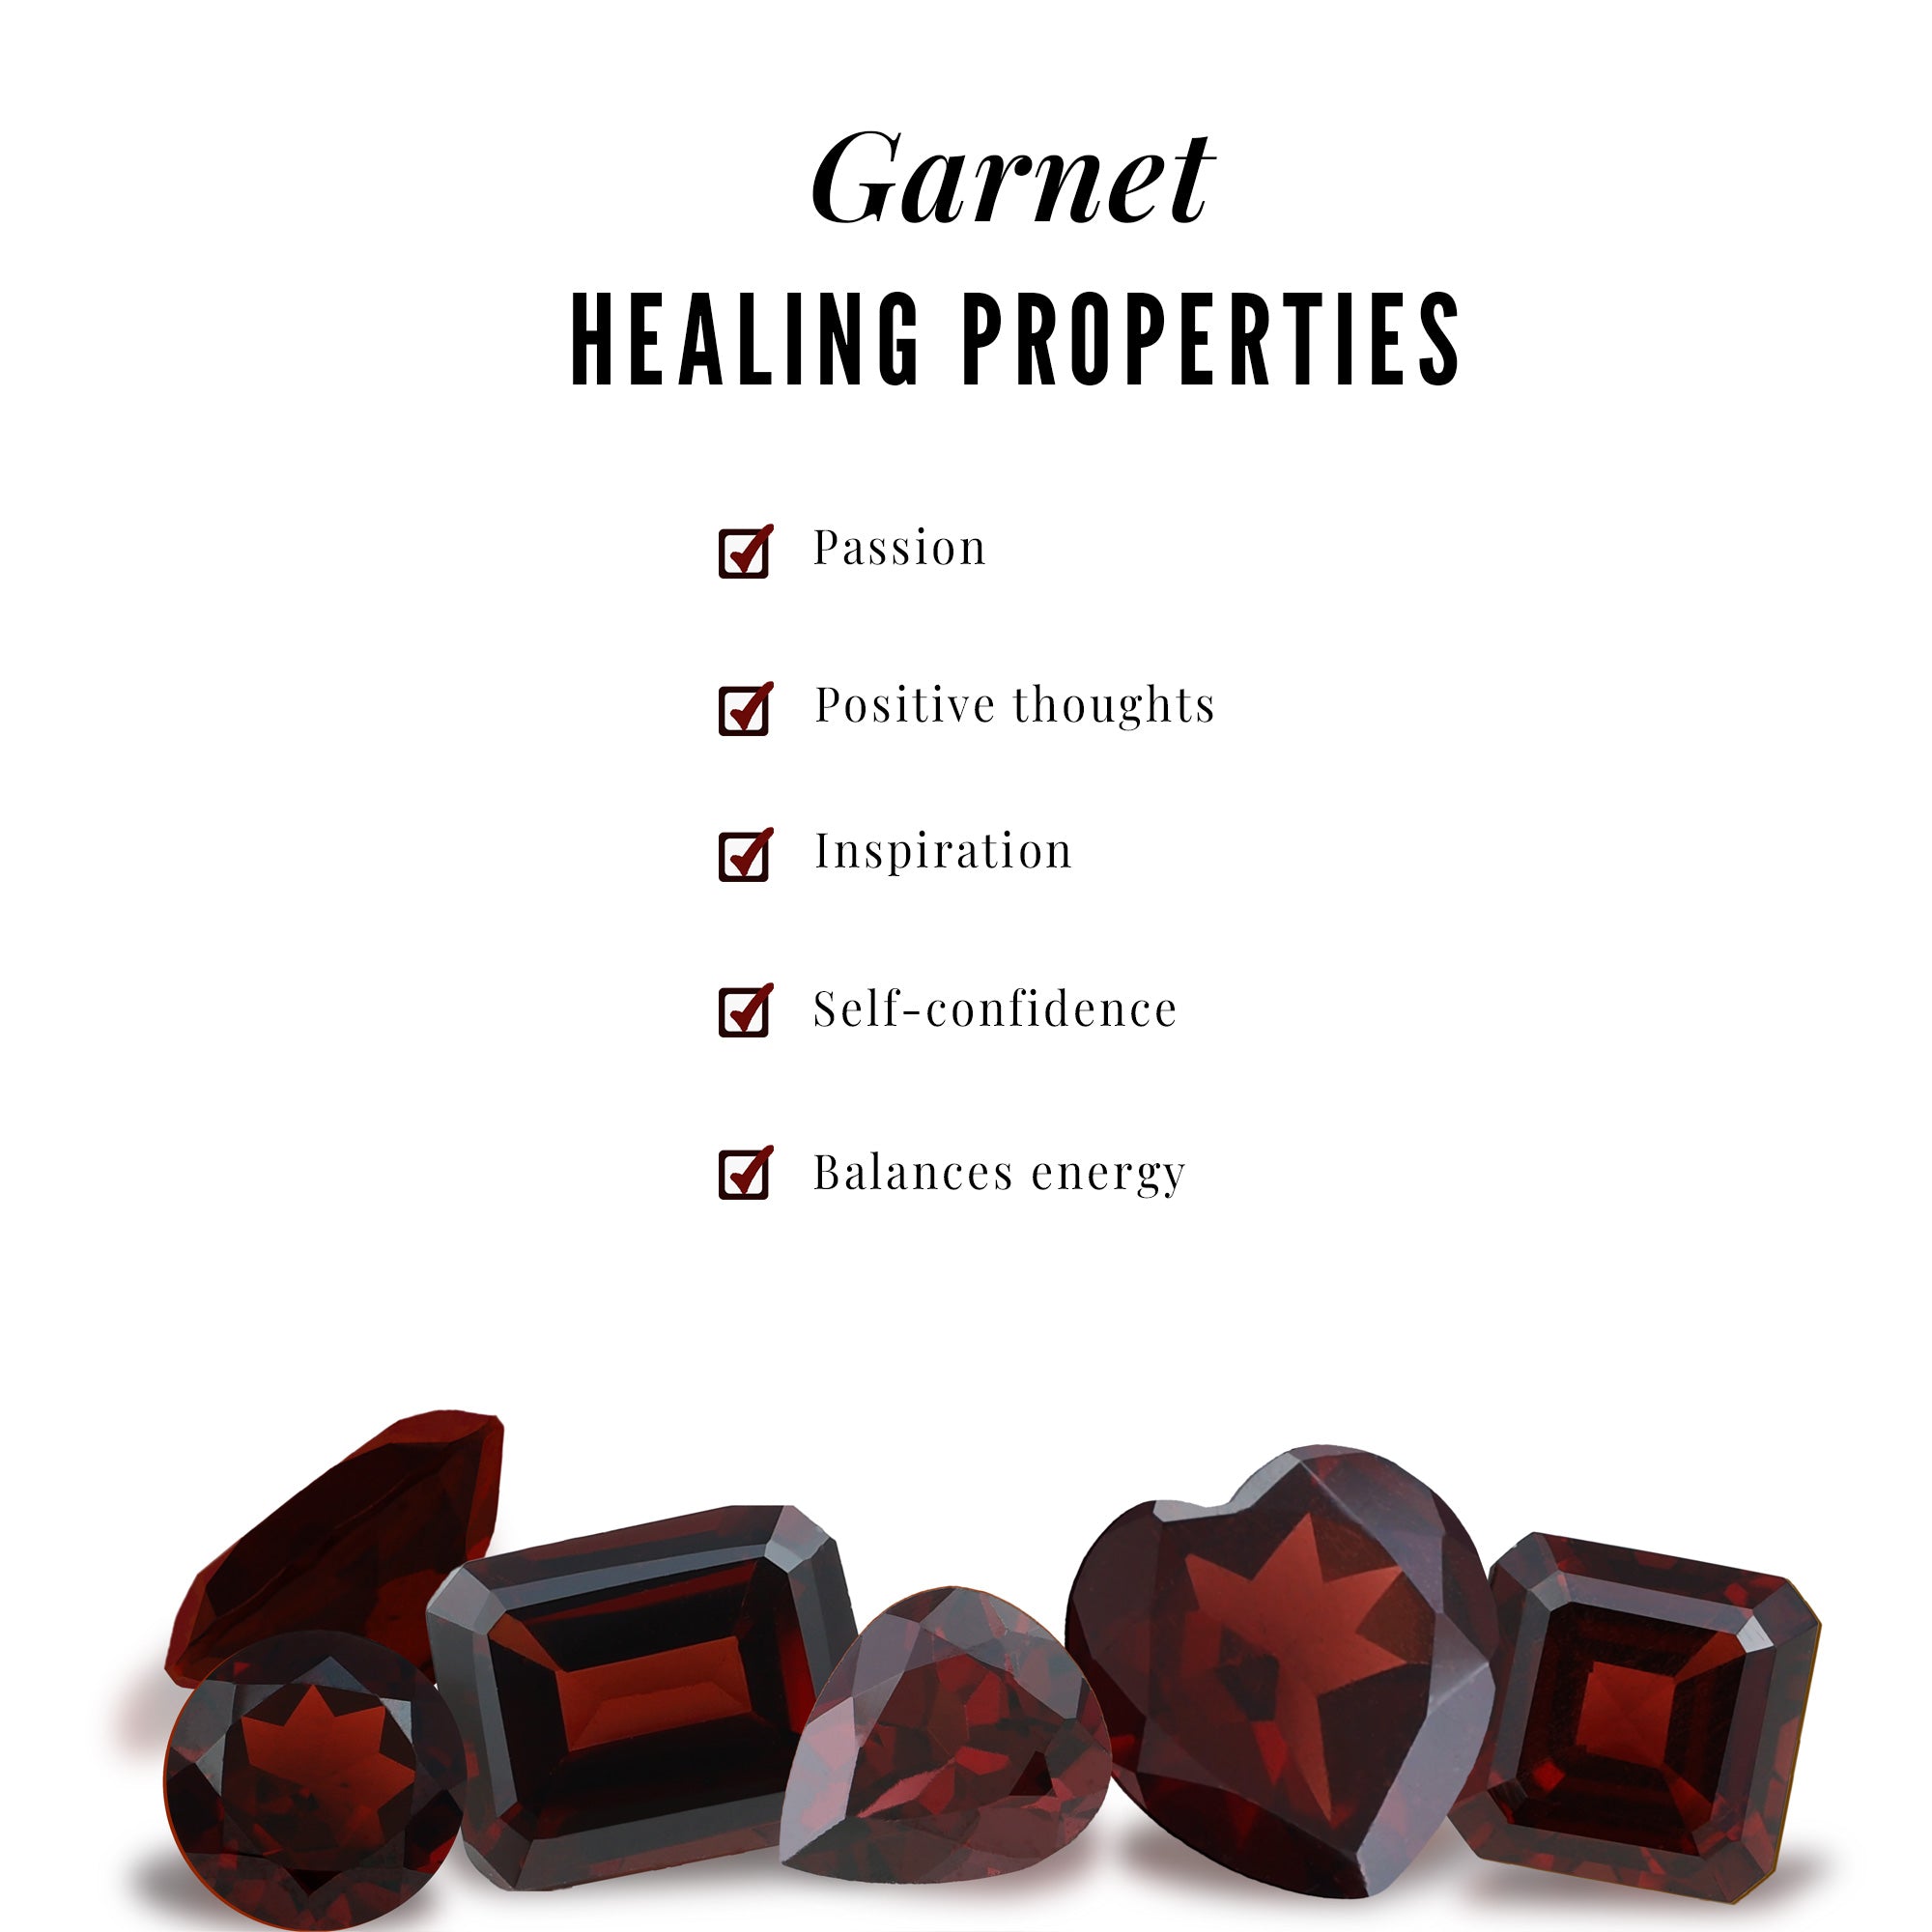 1/4 CT Garnet and Gold Star Pendant Garnet - ( AAA ) - Quality - Rosec Jewels